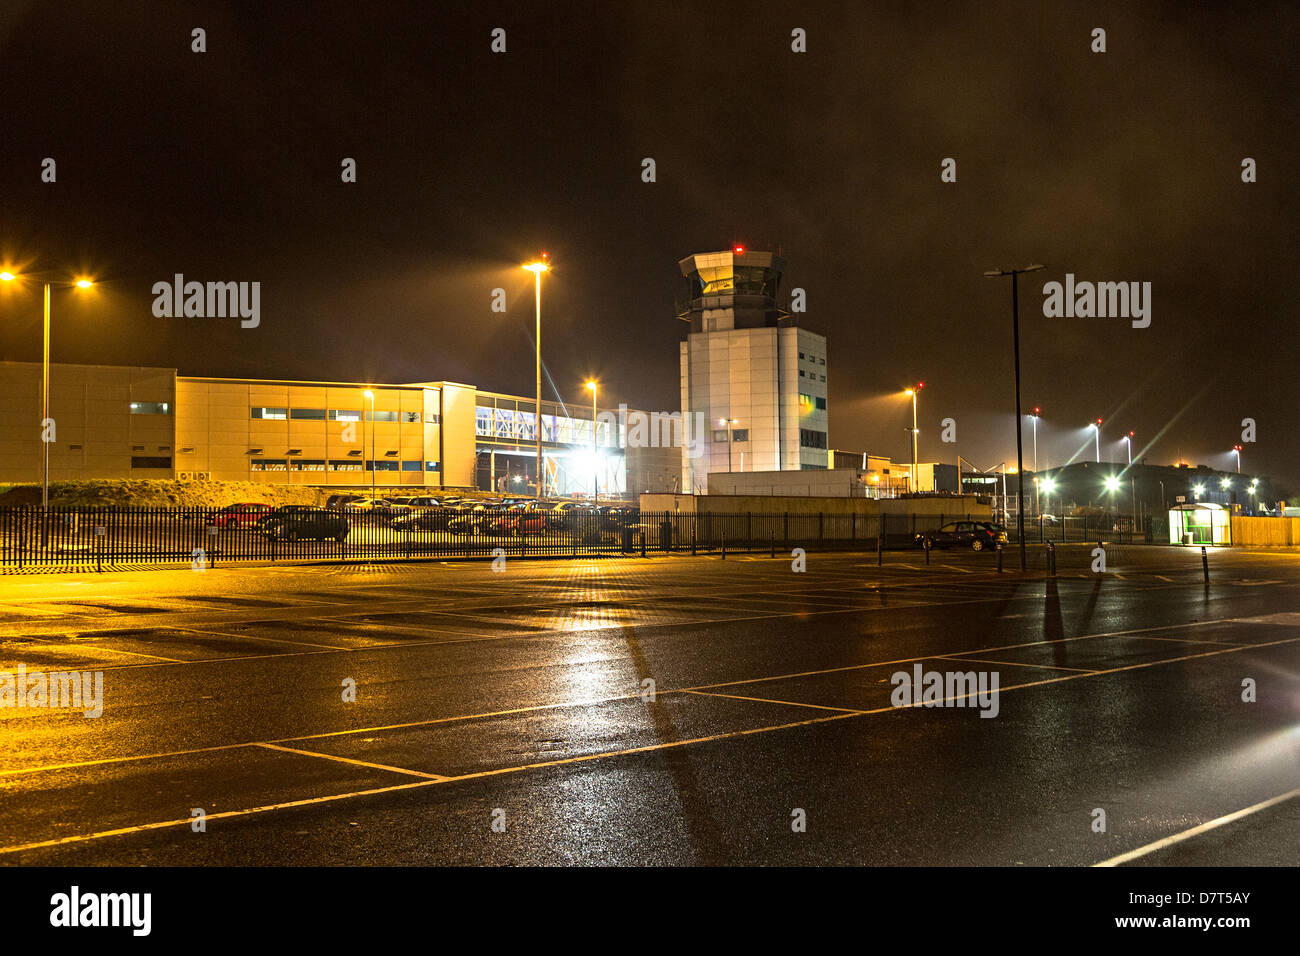 Bristol airport car park and control tower at night, UK Stock Photo